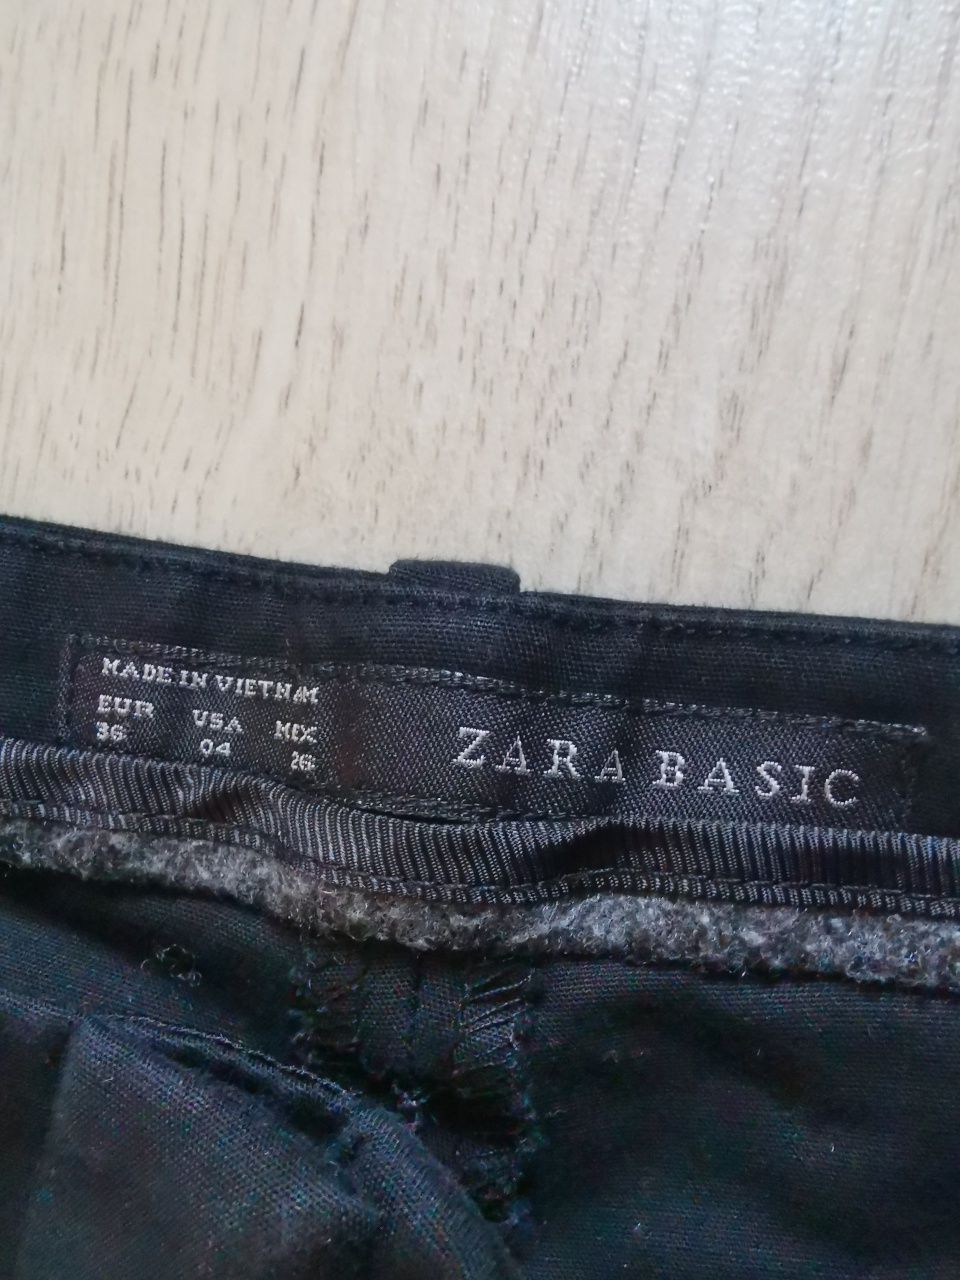 Zara Basic r S 36 spodnie cygaretki 7/8 garniturowe eleganckie